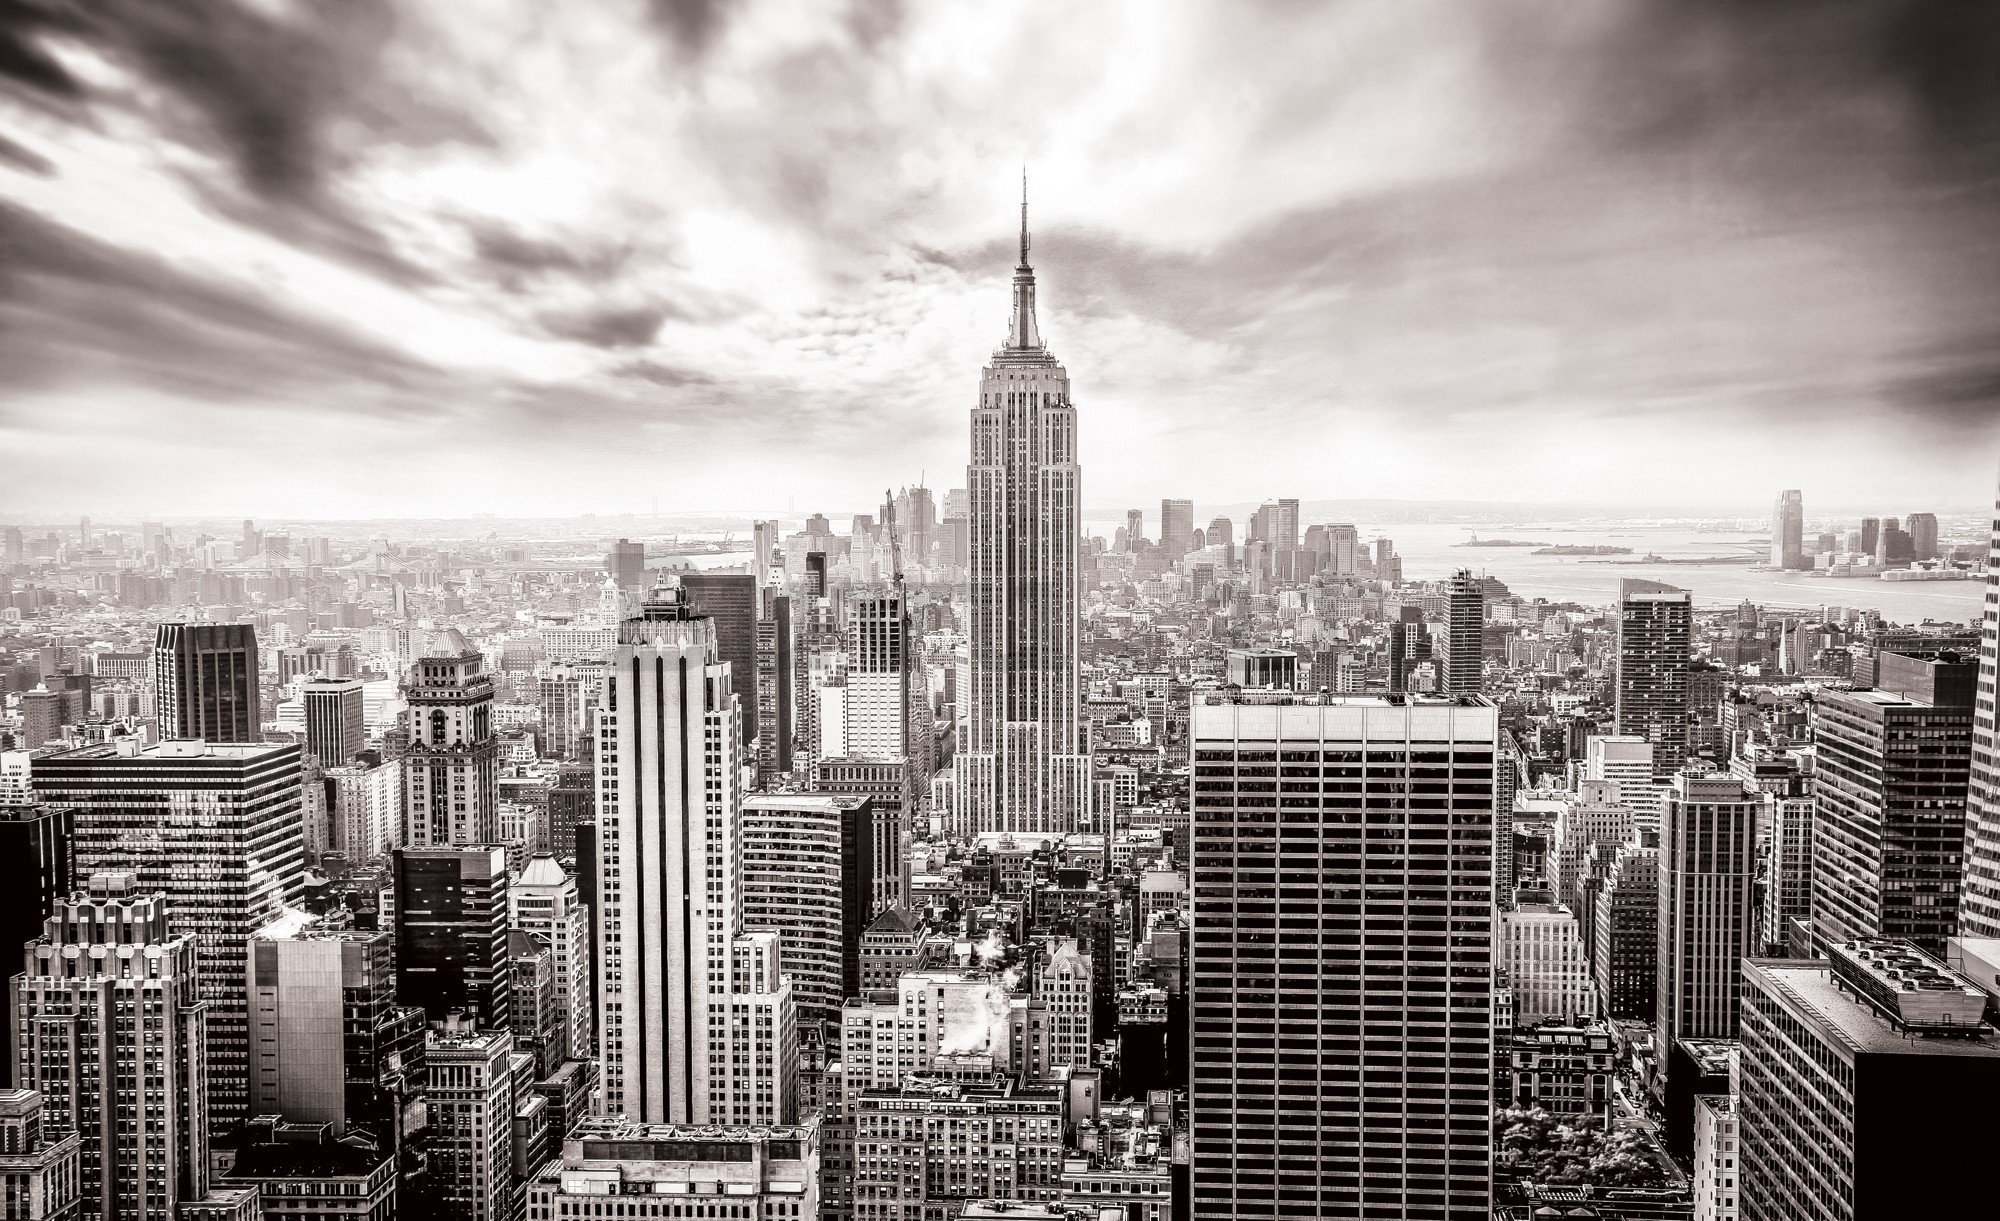 Fotomurale in TNT: Vista di New York (in bianco e nero) - 416x254 cm